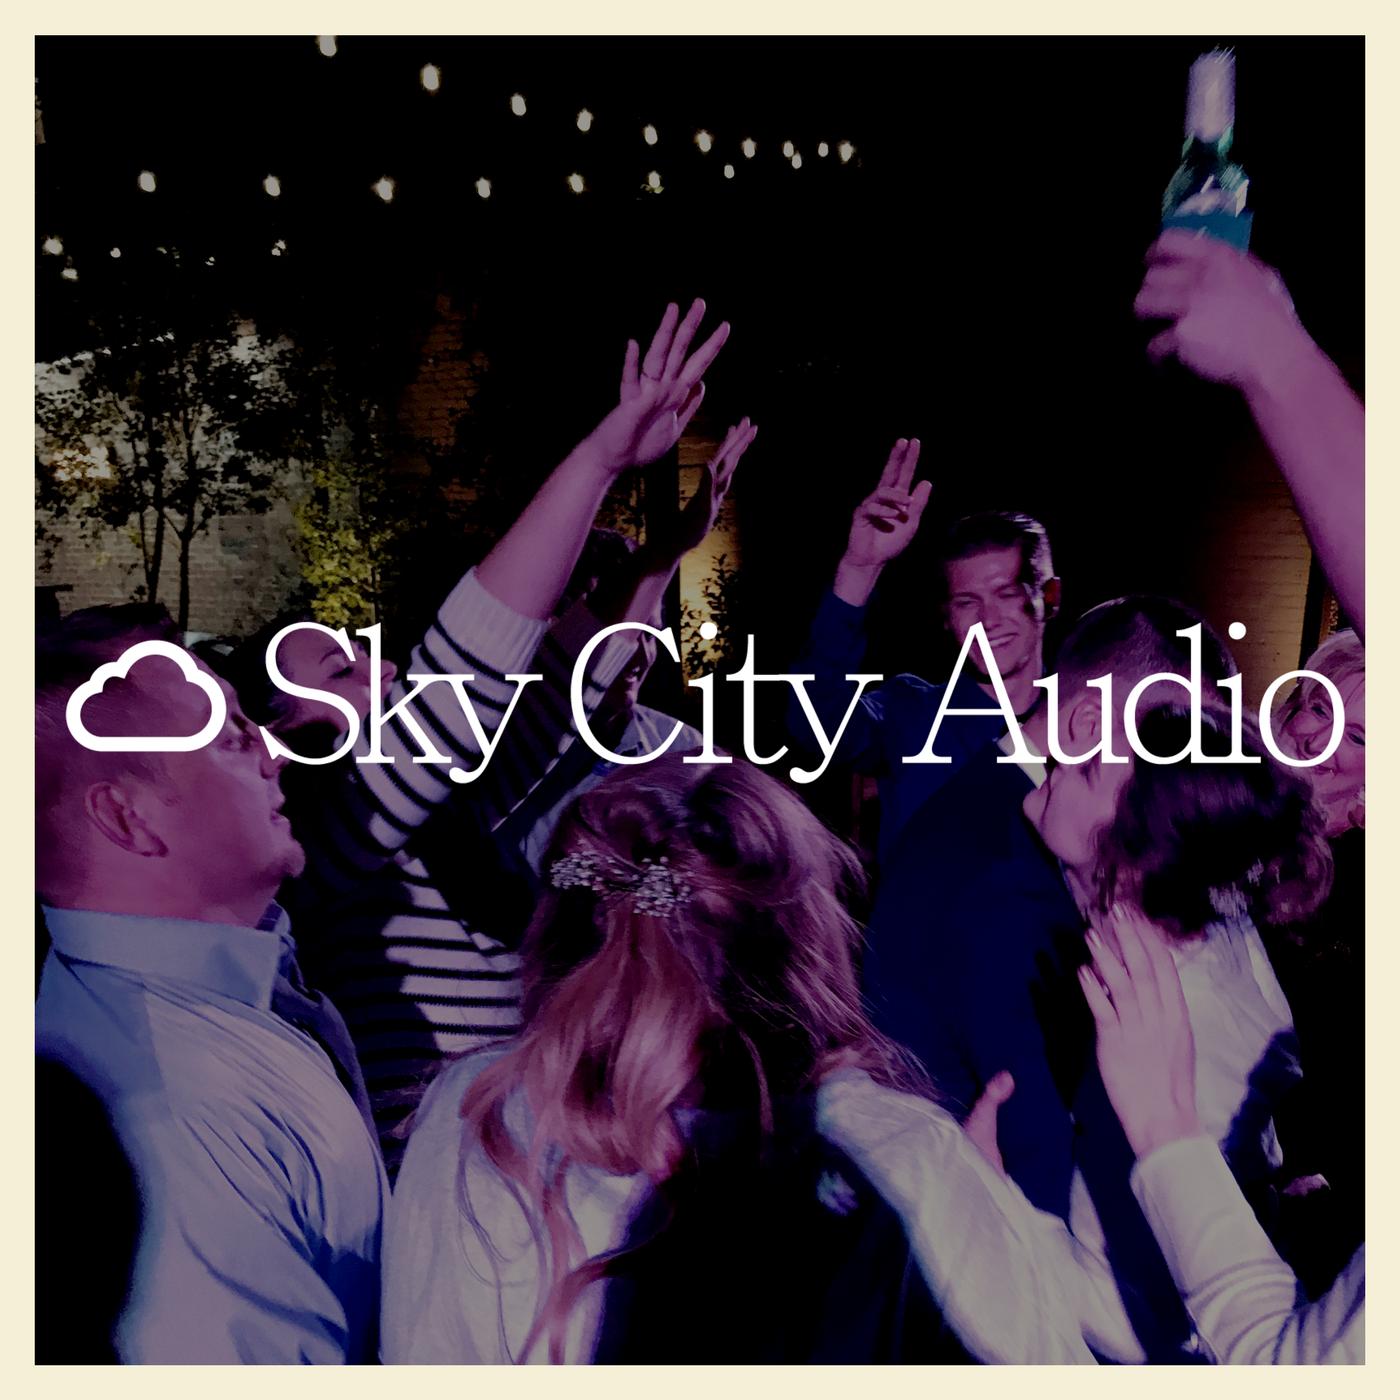 Sky City Audio